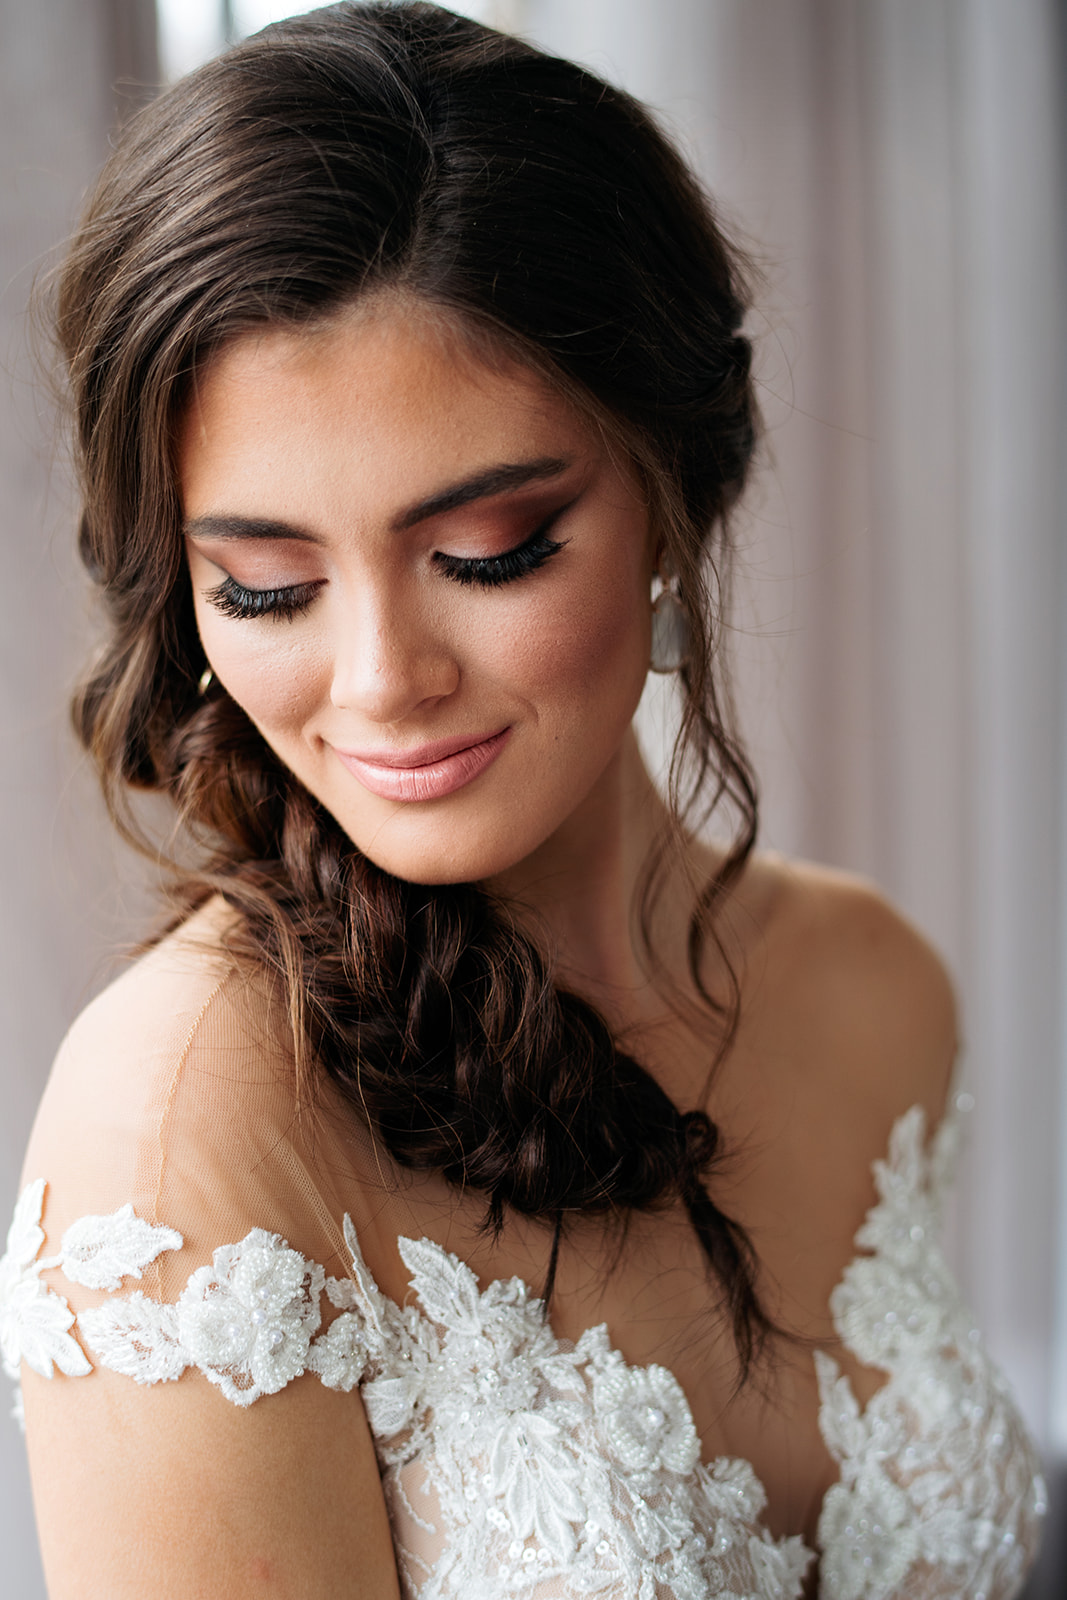 Milla Nova Gloria - Blushing Bridal Boutique